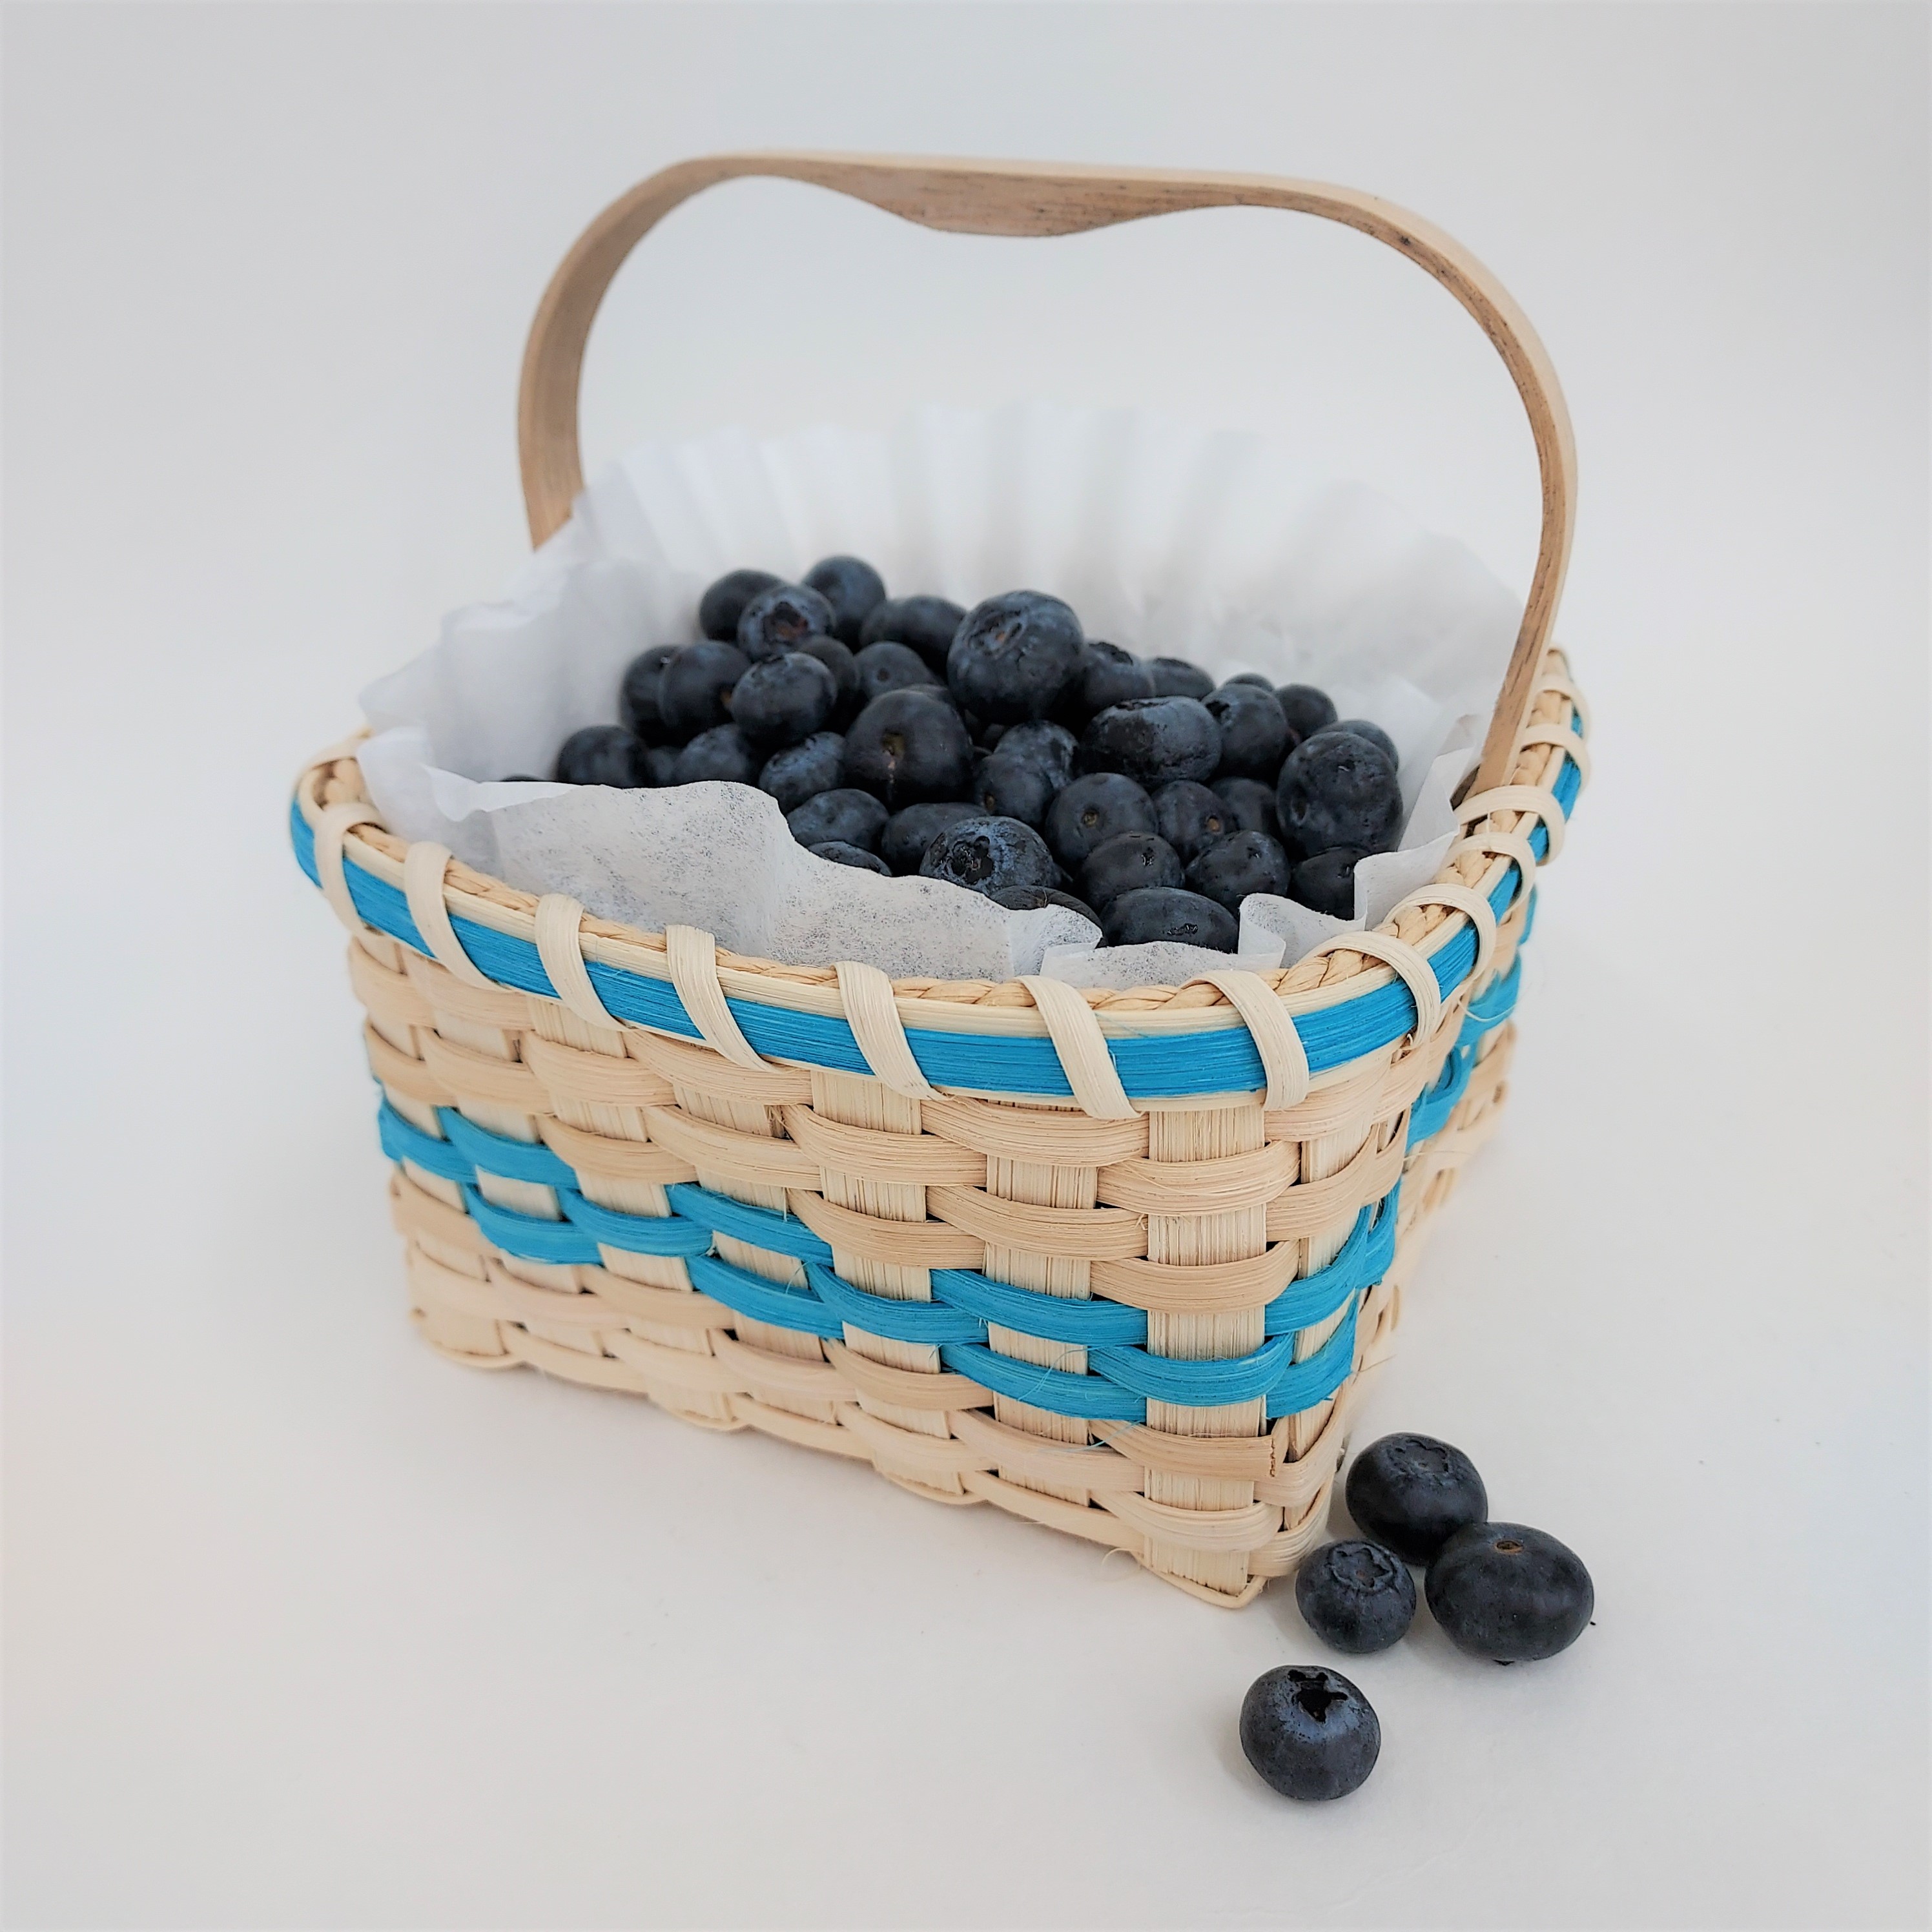 Cape Cod Blueberry Basket